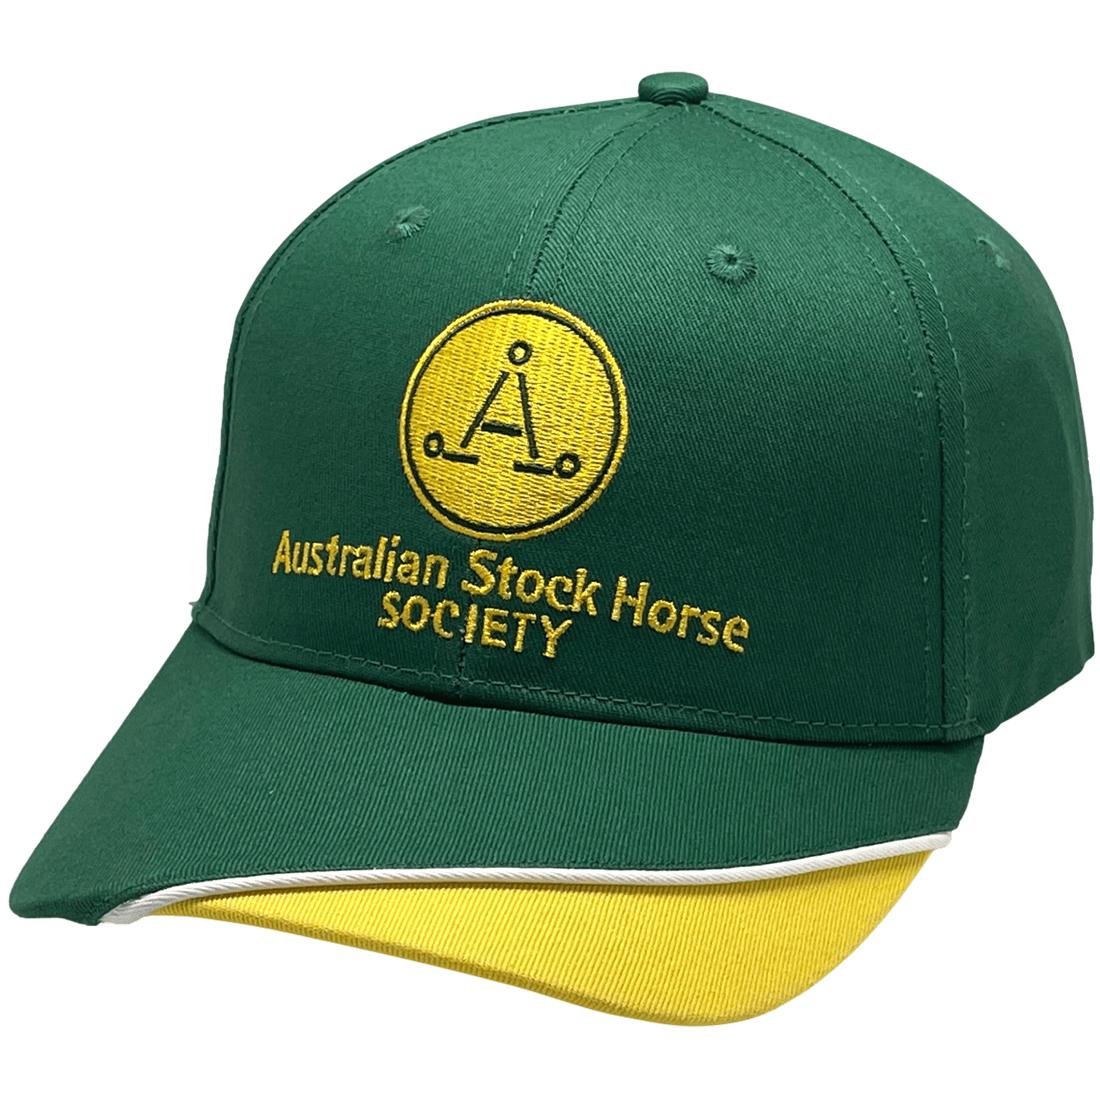 Australian Srock Horse Society Custom Snapback Baseball Cap